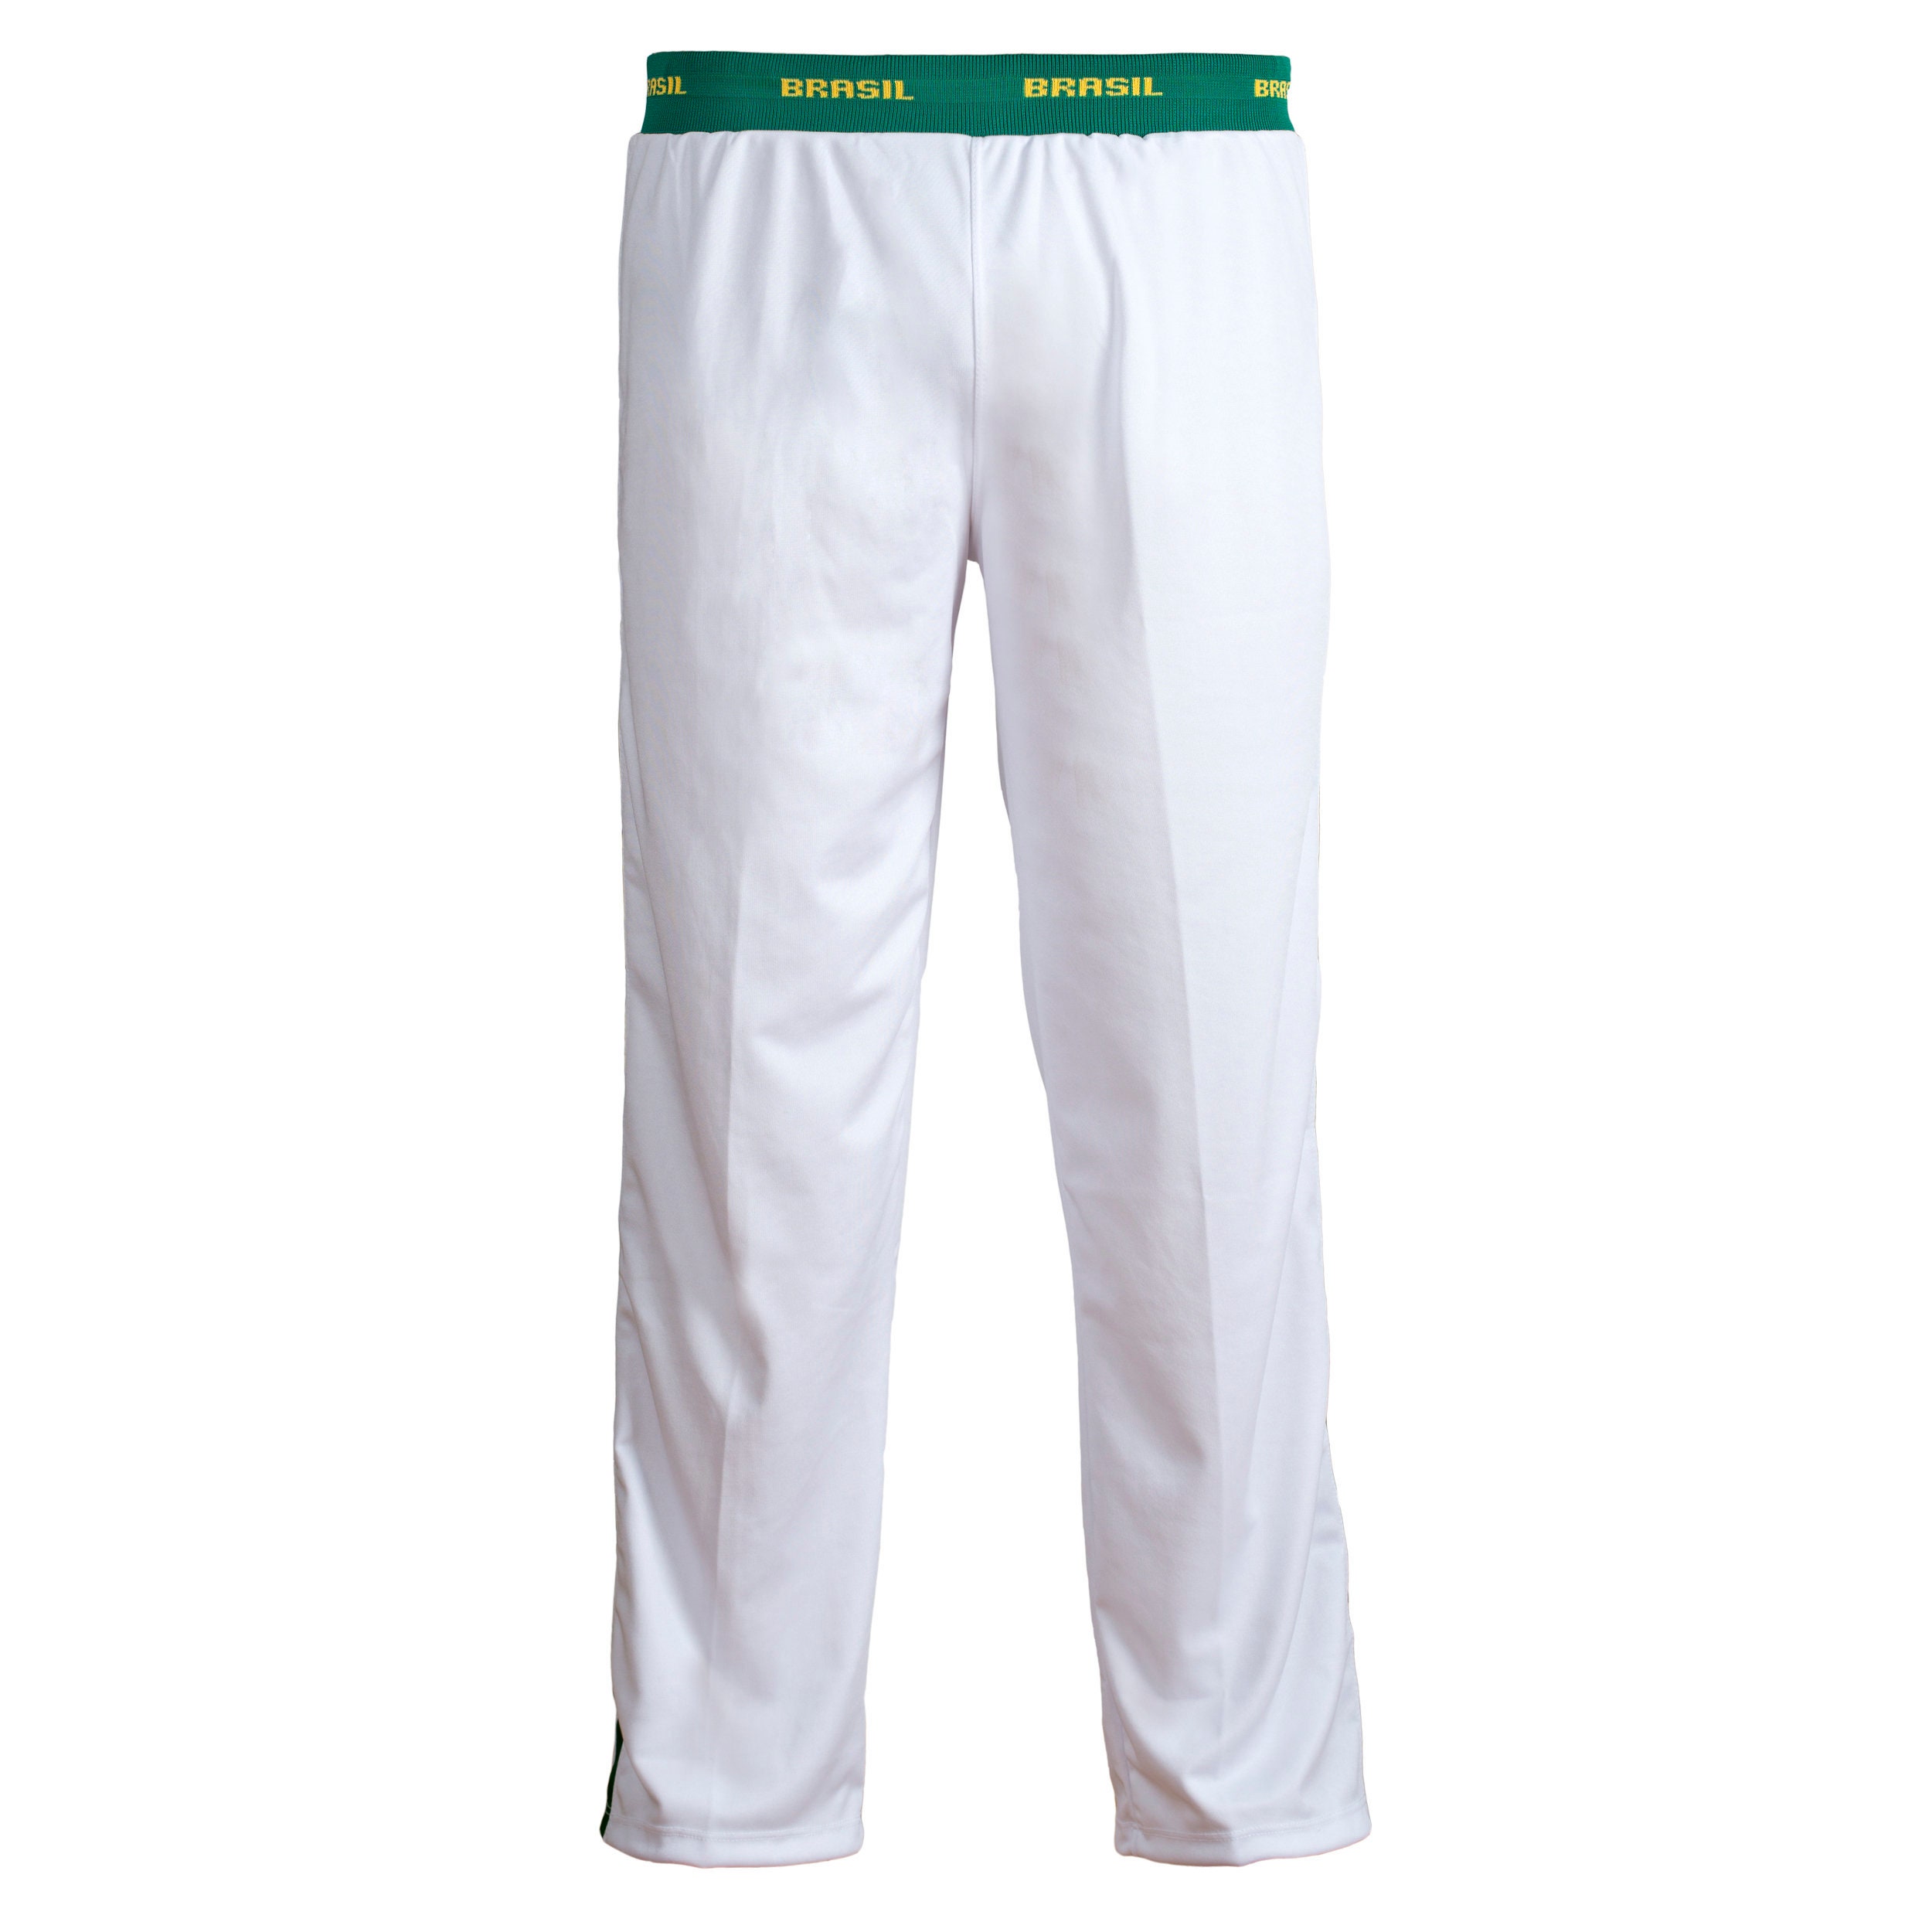 Unisex Green, Blue and White Color Block Stripes JL Sport Original Brazilian Capoeira Martial Arts Pants 